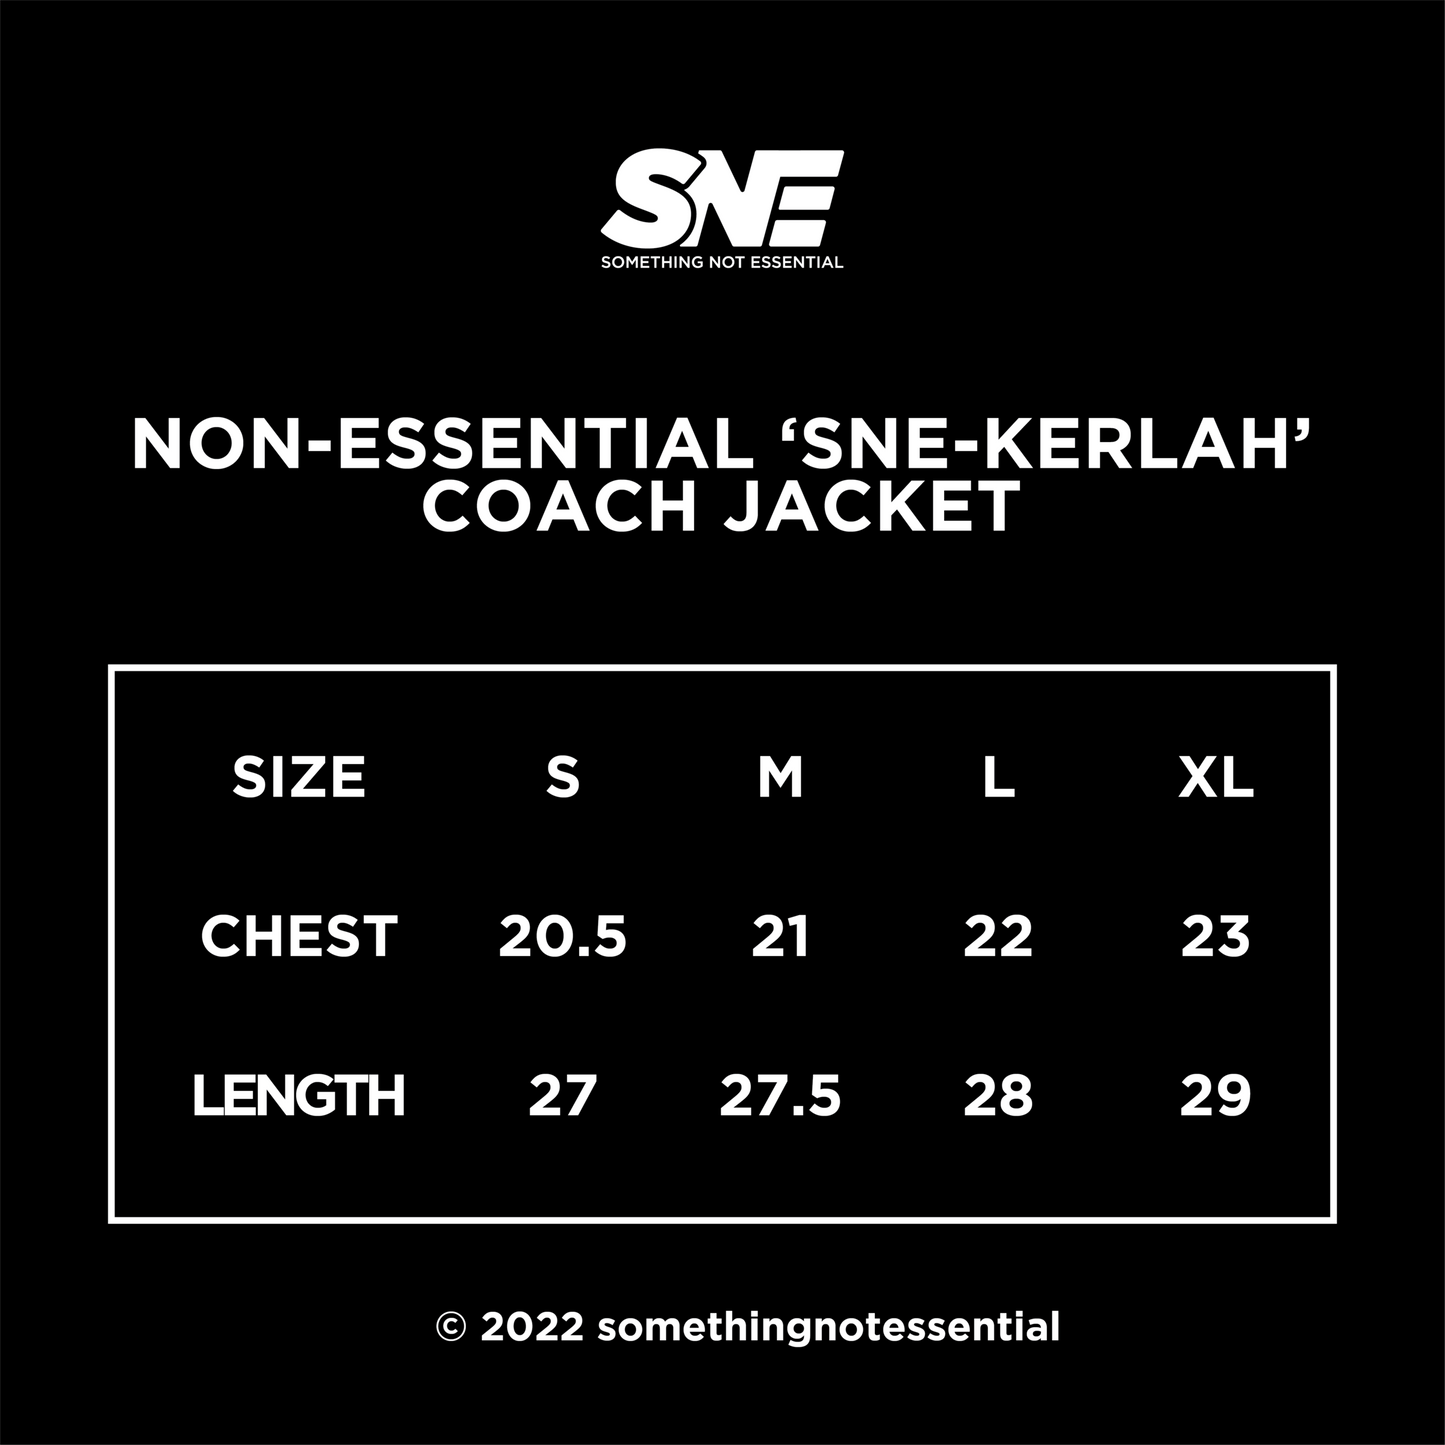 SNE-KERLAH Reflective Coach Jacket